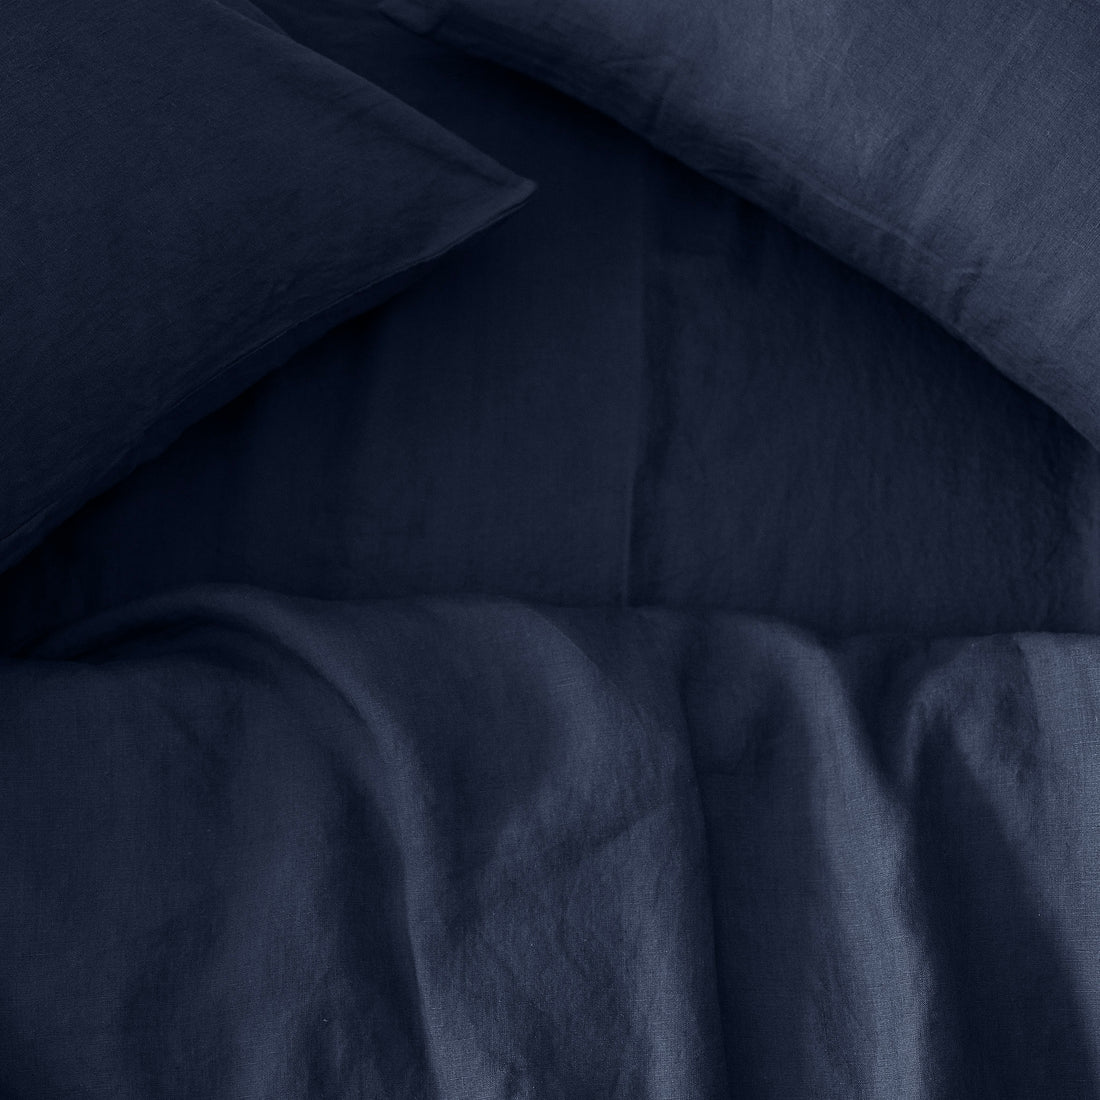 Midnight Blue Linen Duvet Cover